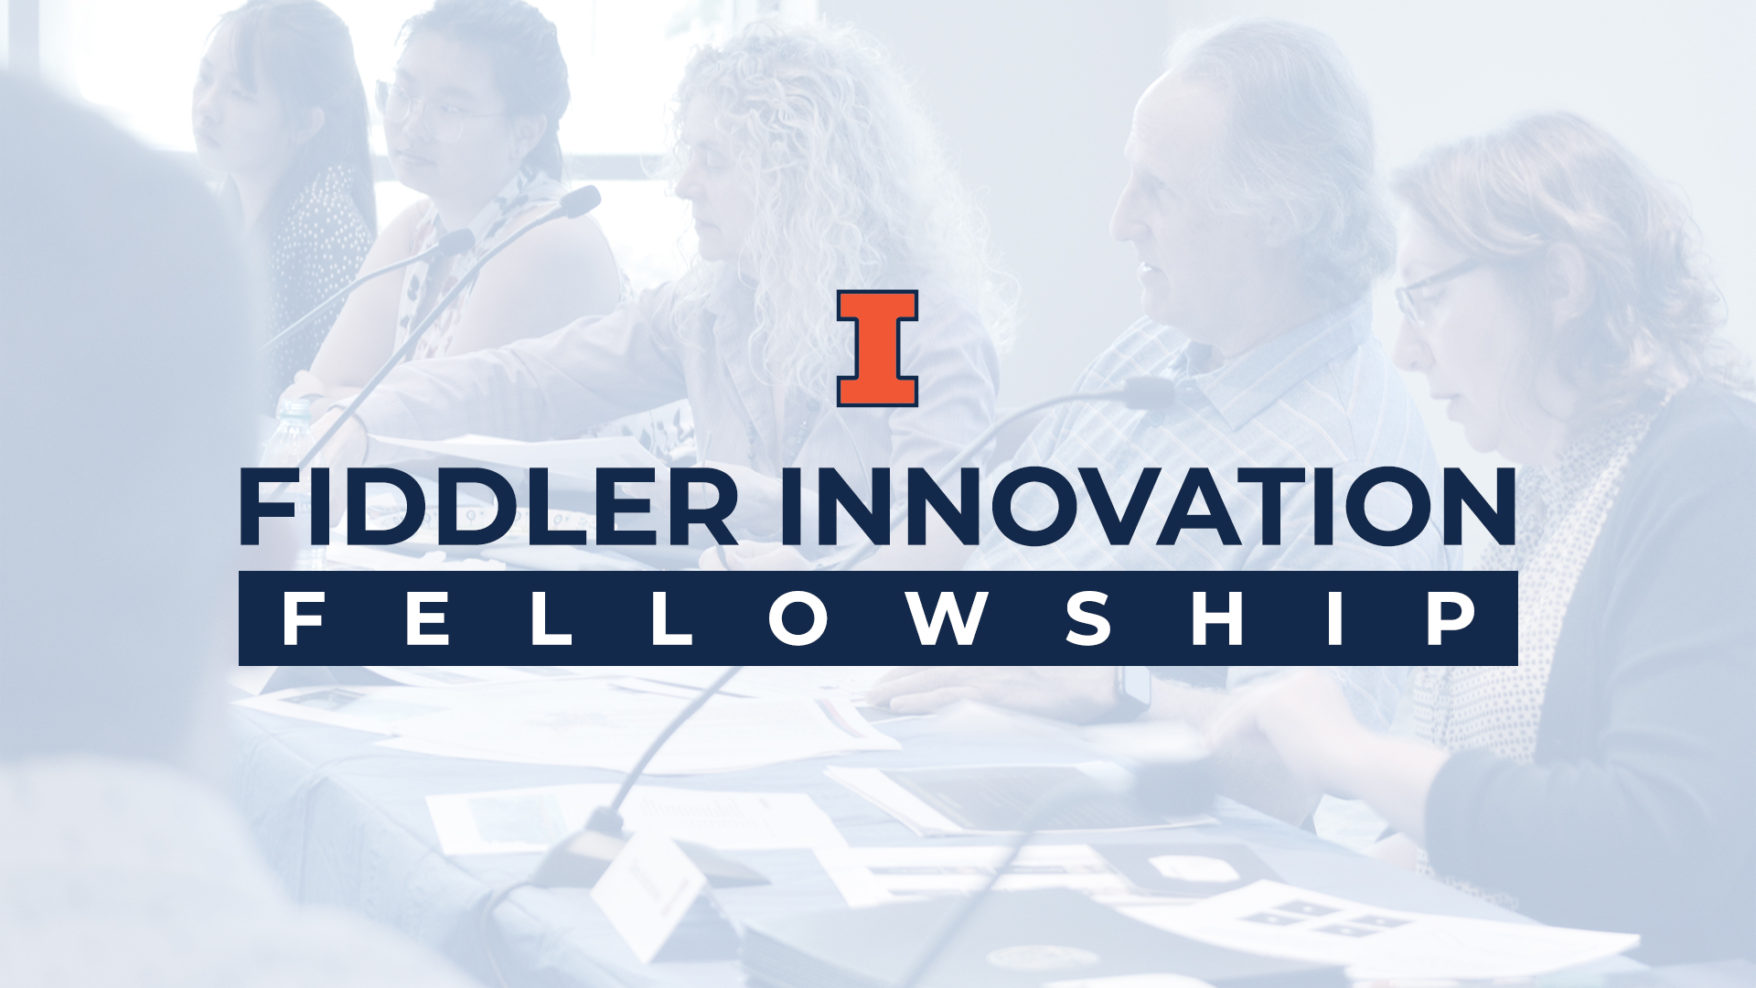 Fiddler Innovation Fellowship